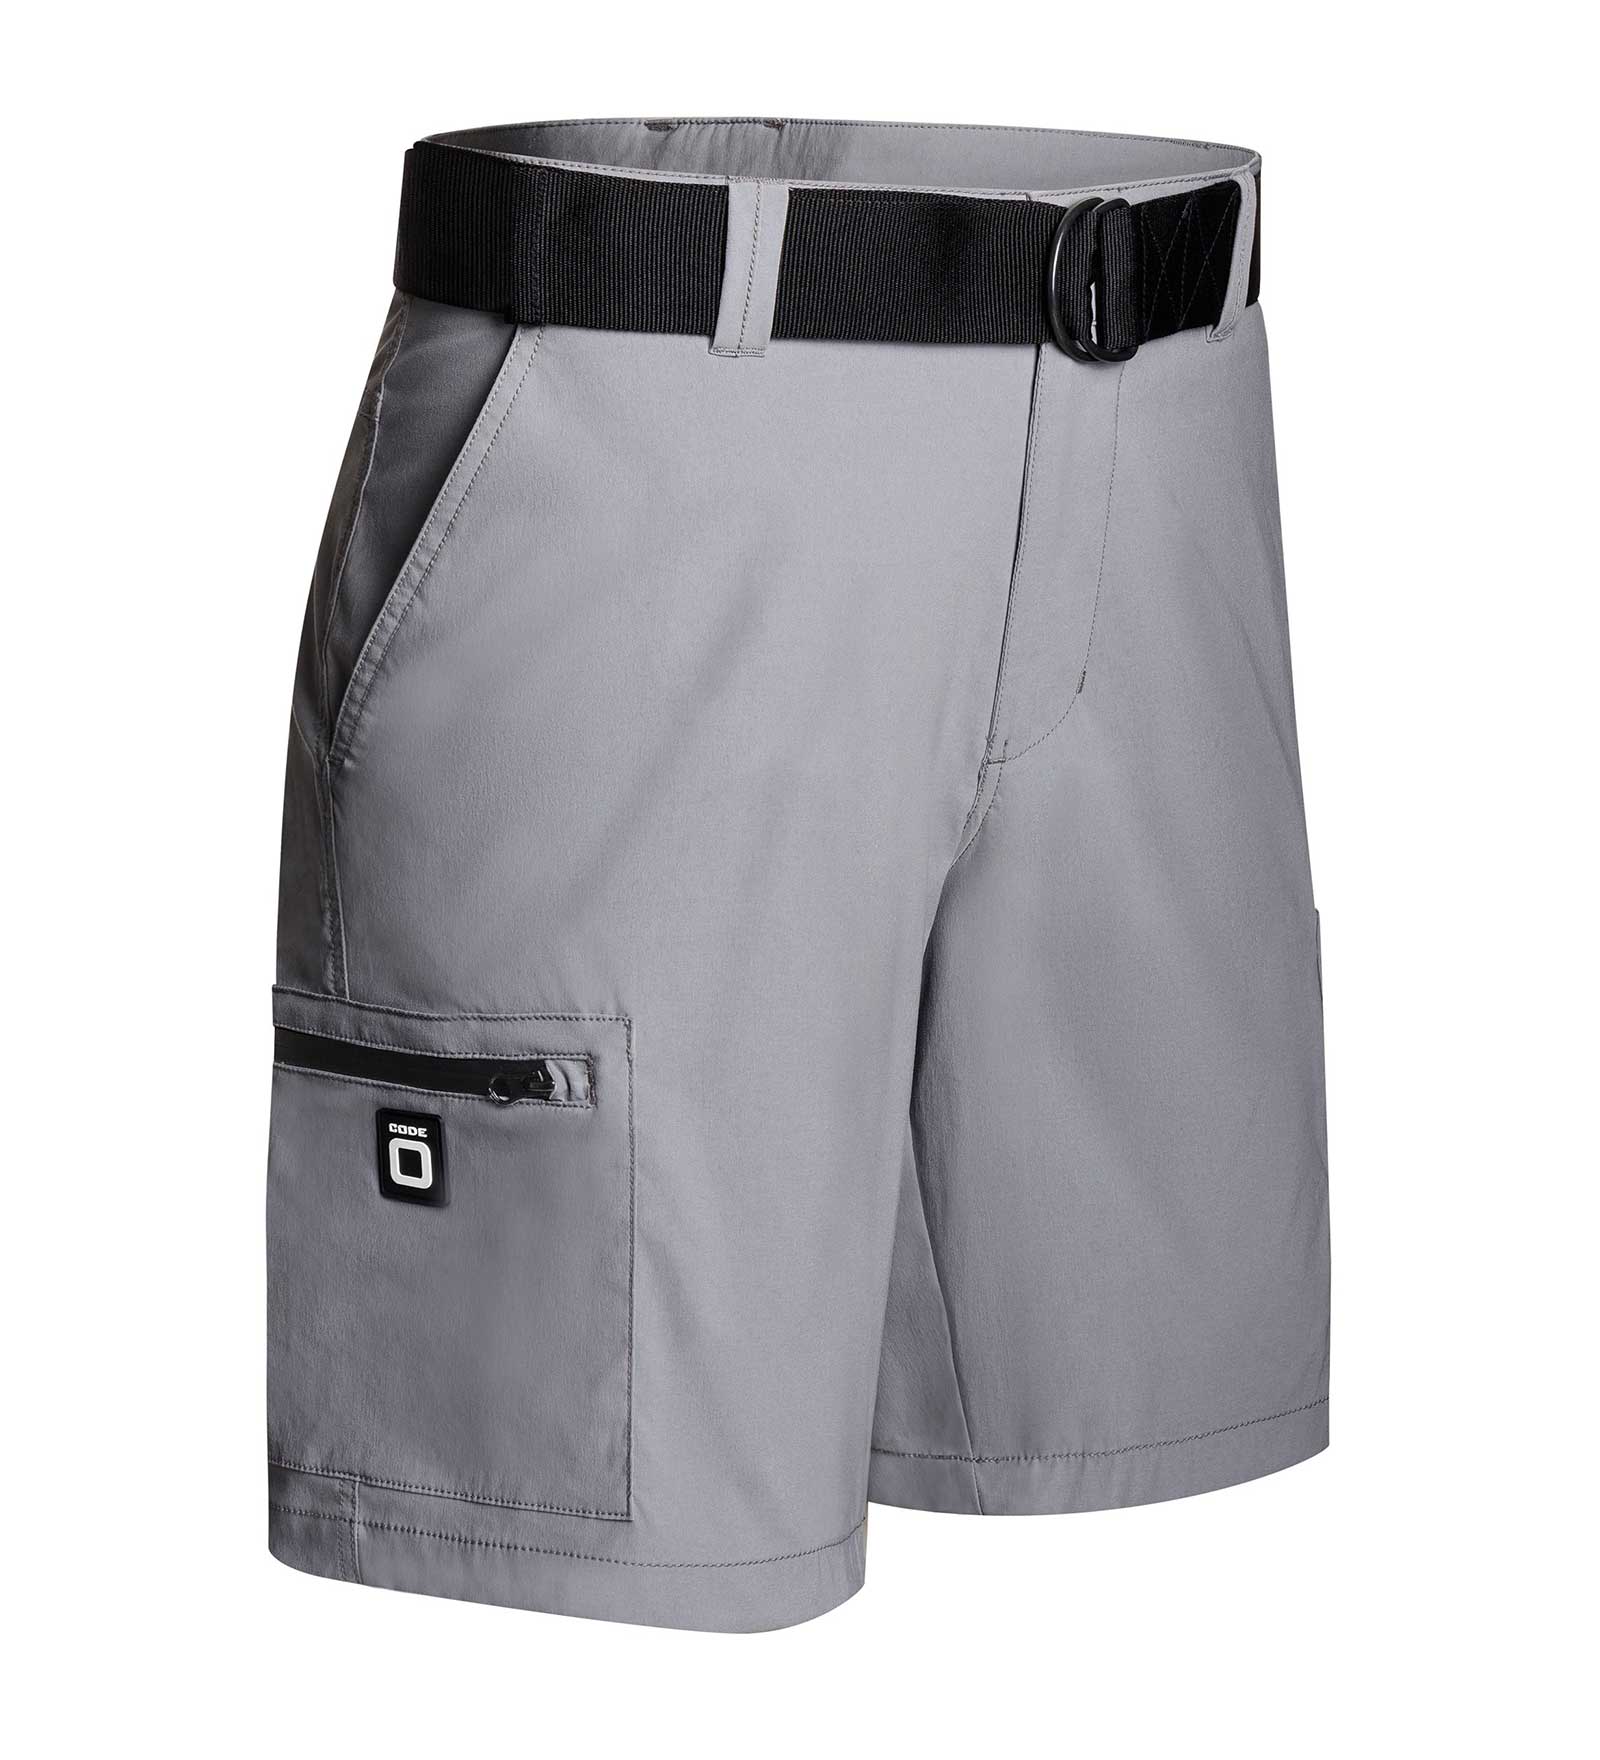 https://www.code-zero.com/uploads/media/2c/3b/66/1635960599/shorts-men-luff-side-pocket-grey.jpg